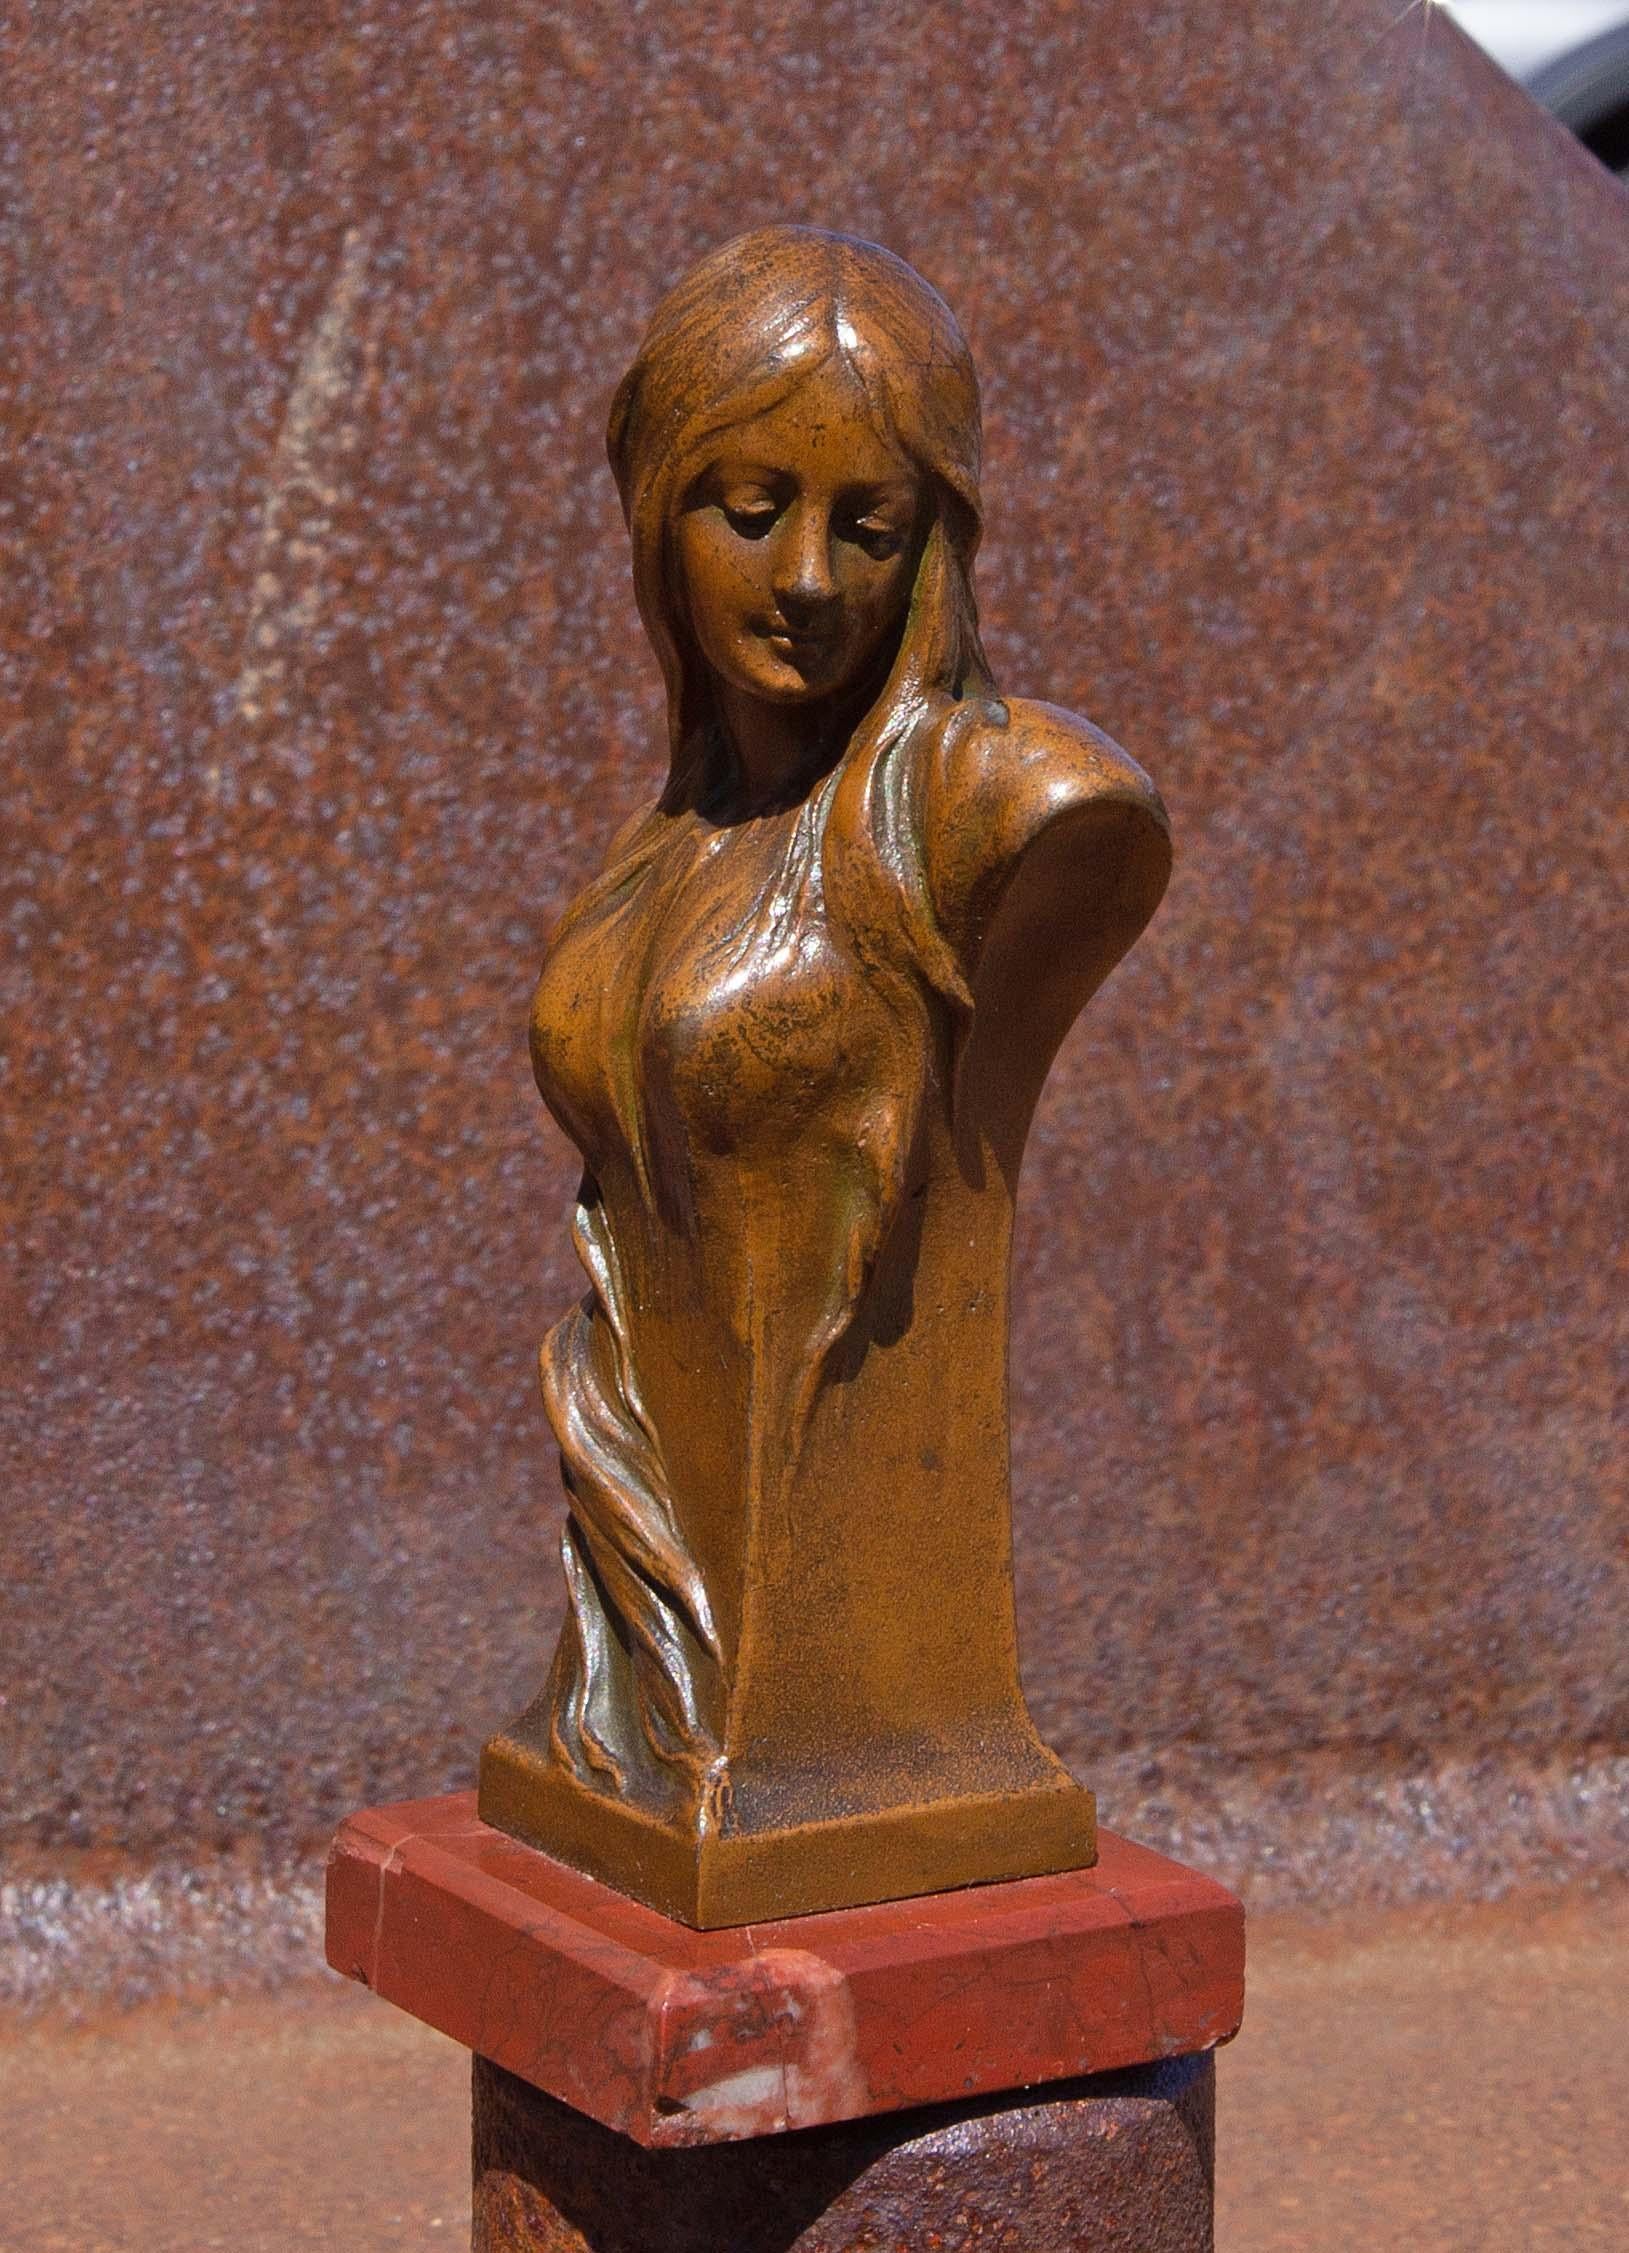 Art Nouveau Sculpture of a Young Woman - Gold Figurative Sculpture by Unknown